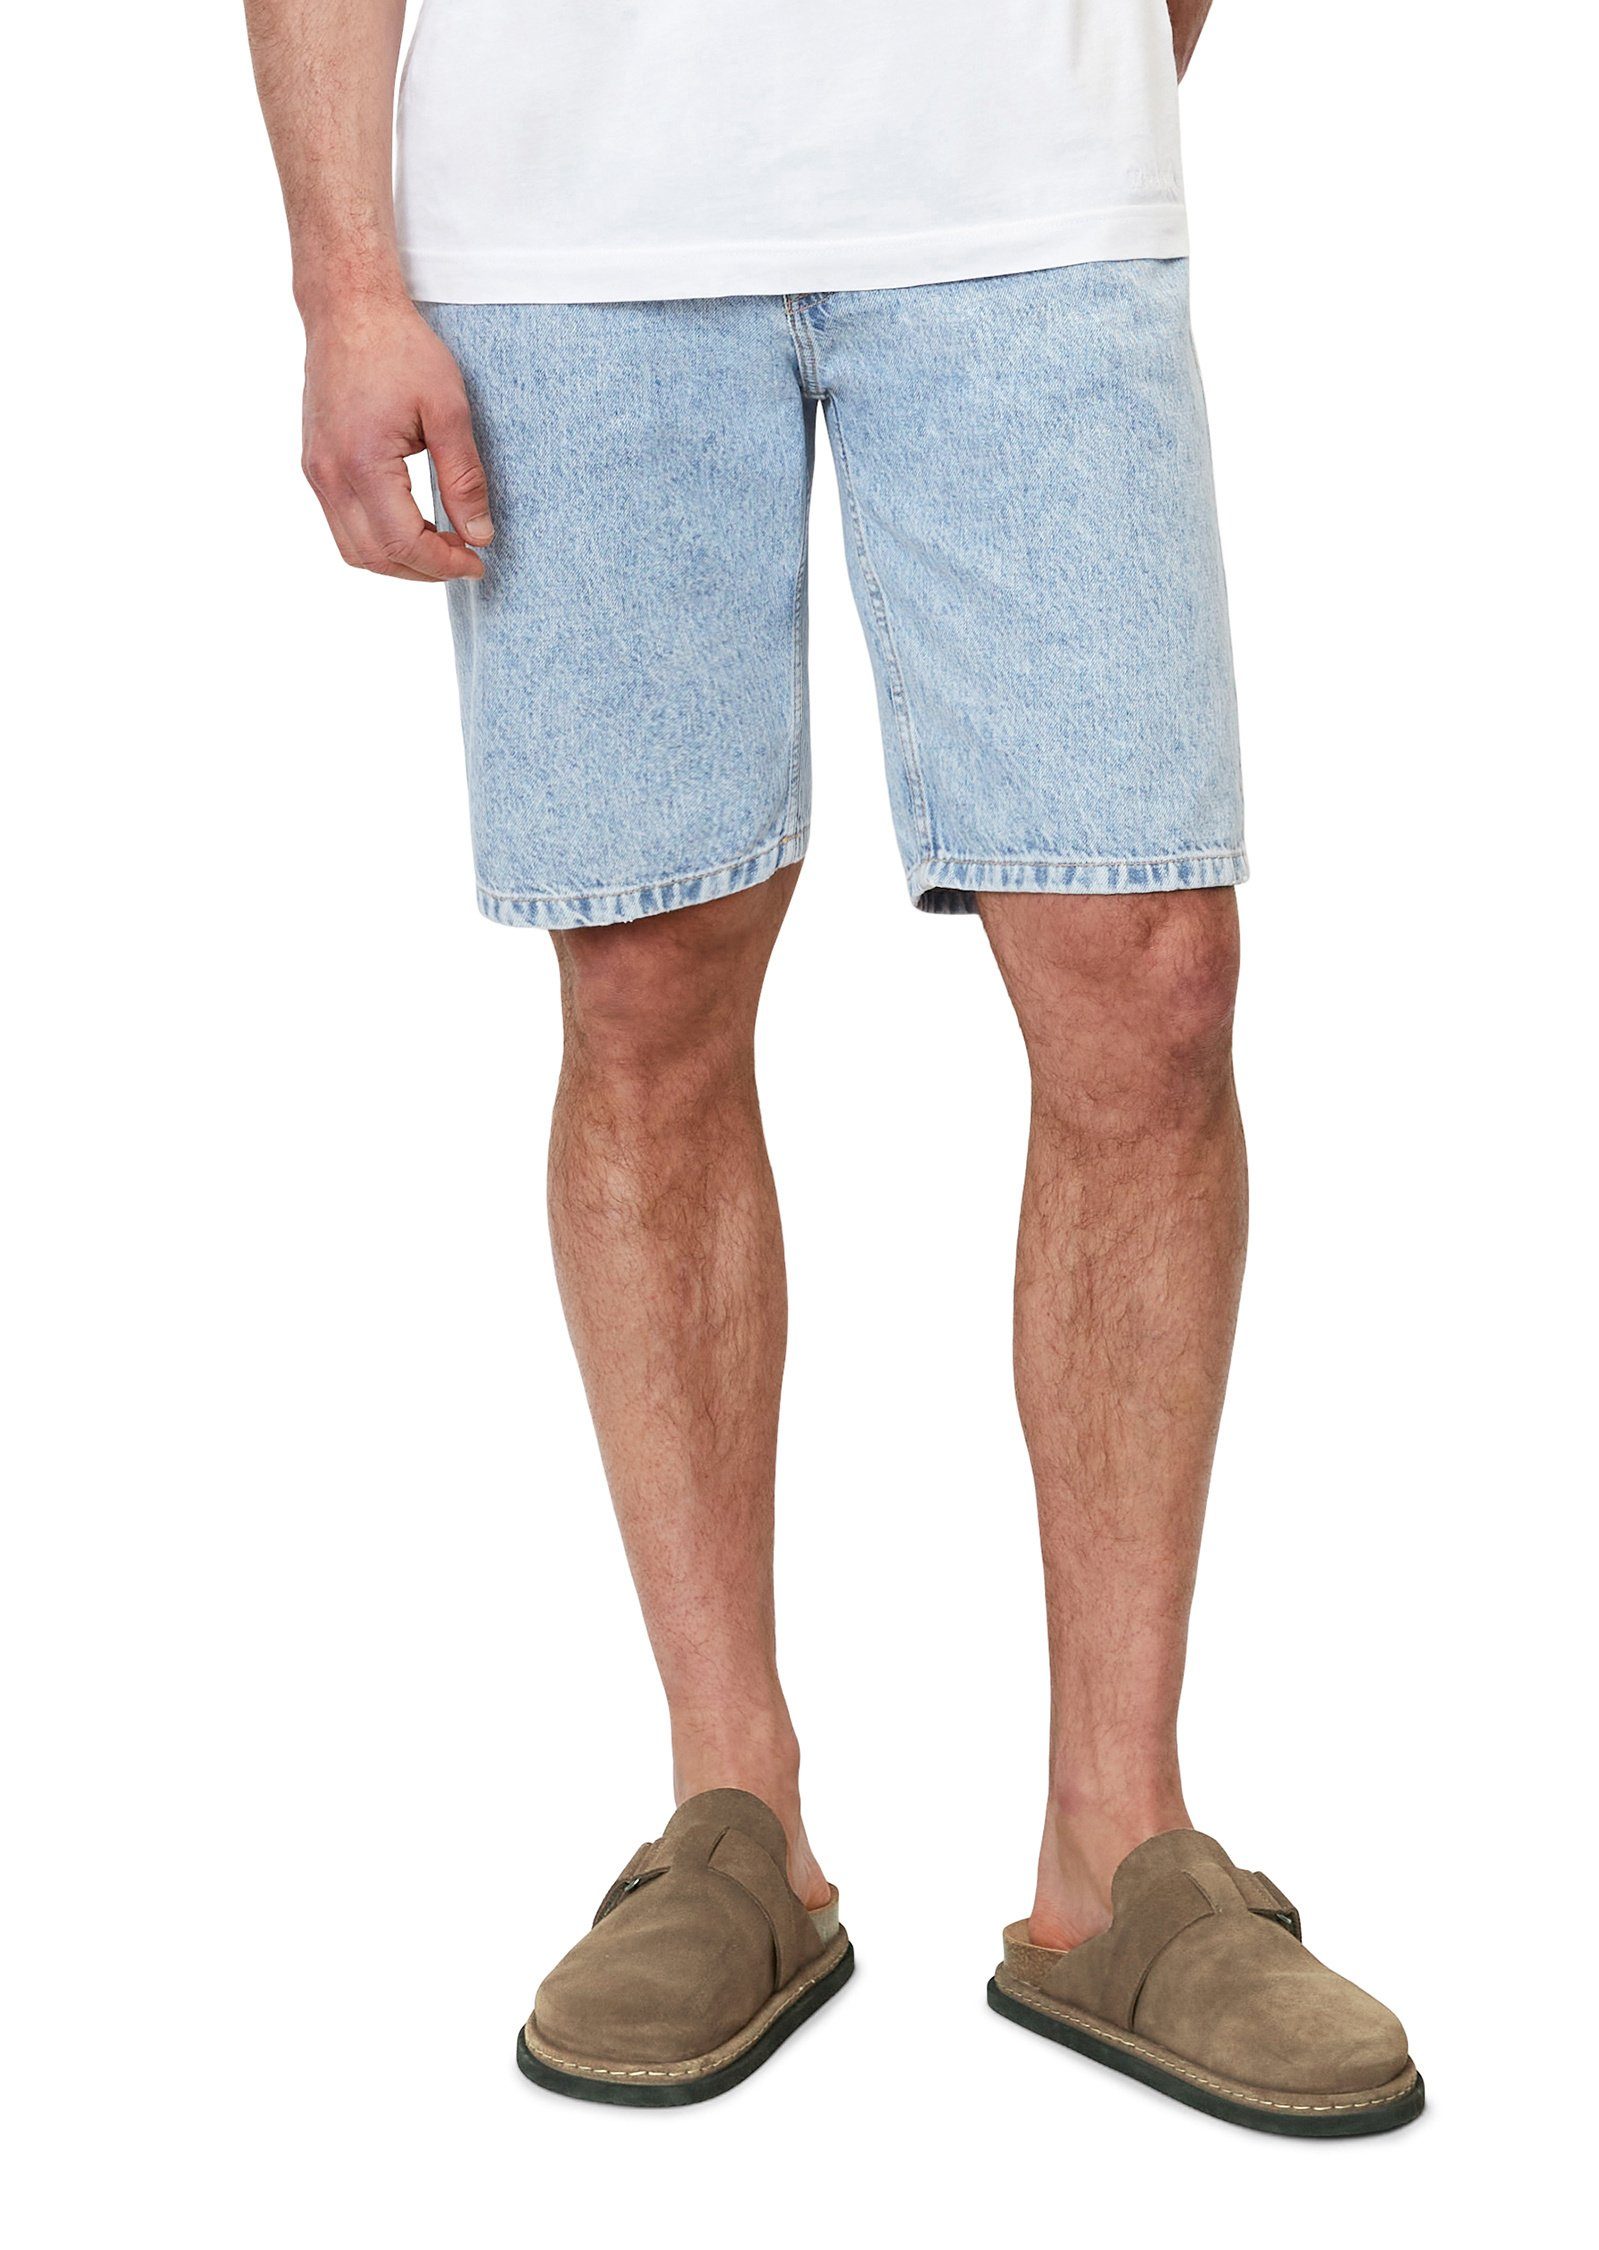 O'Polo Shorts aus hellblau reiner Bio-Baumwolle Marc